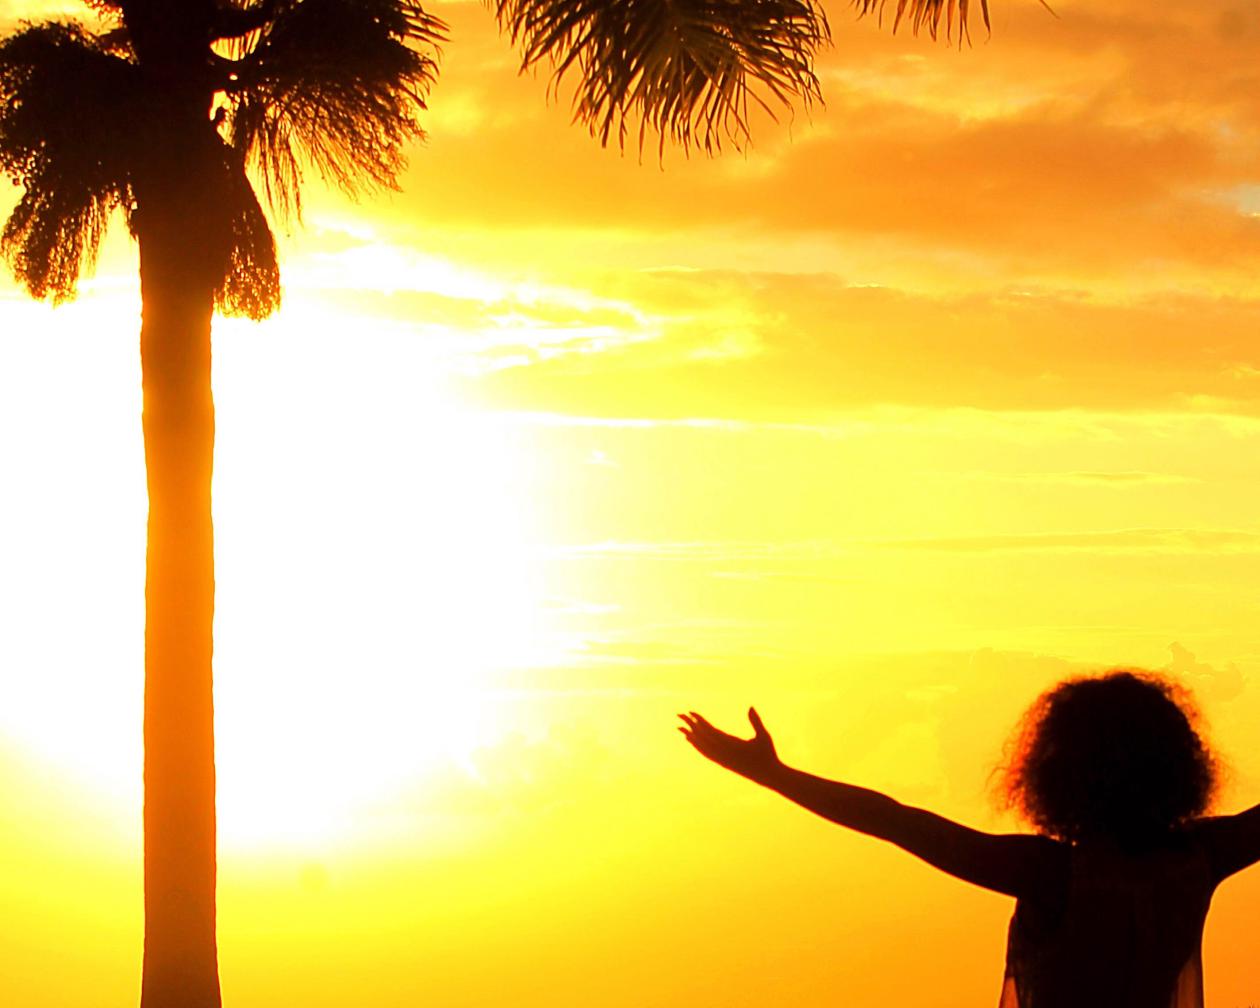 A woman enjoys the sunset by the beach